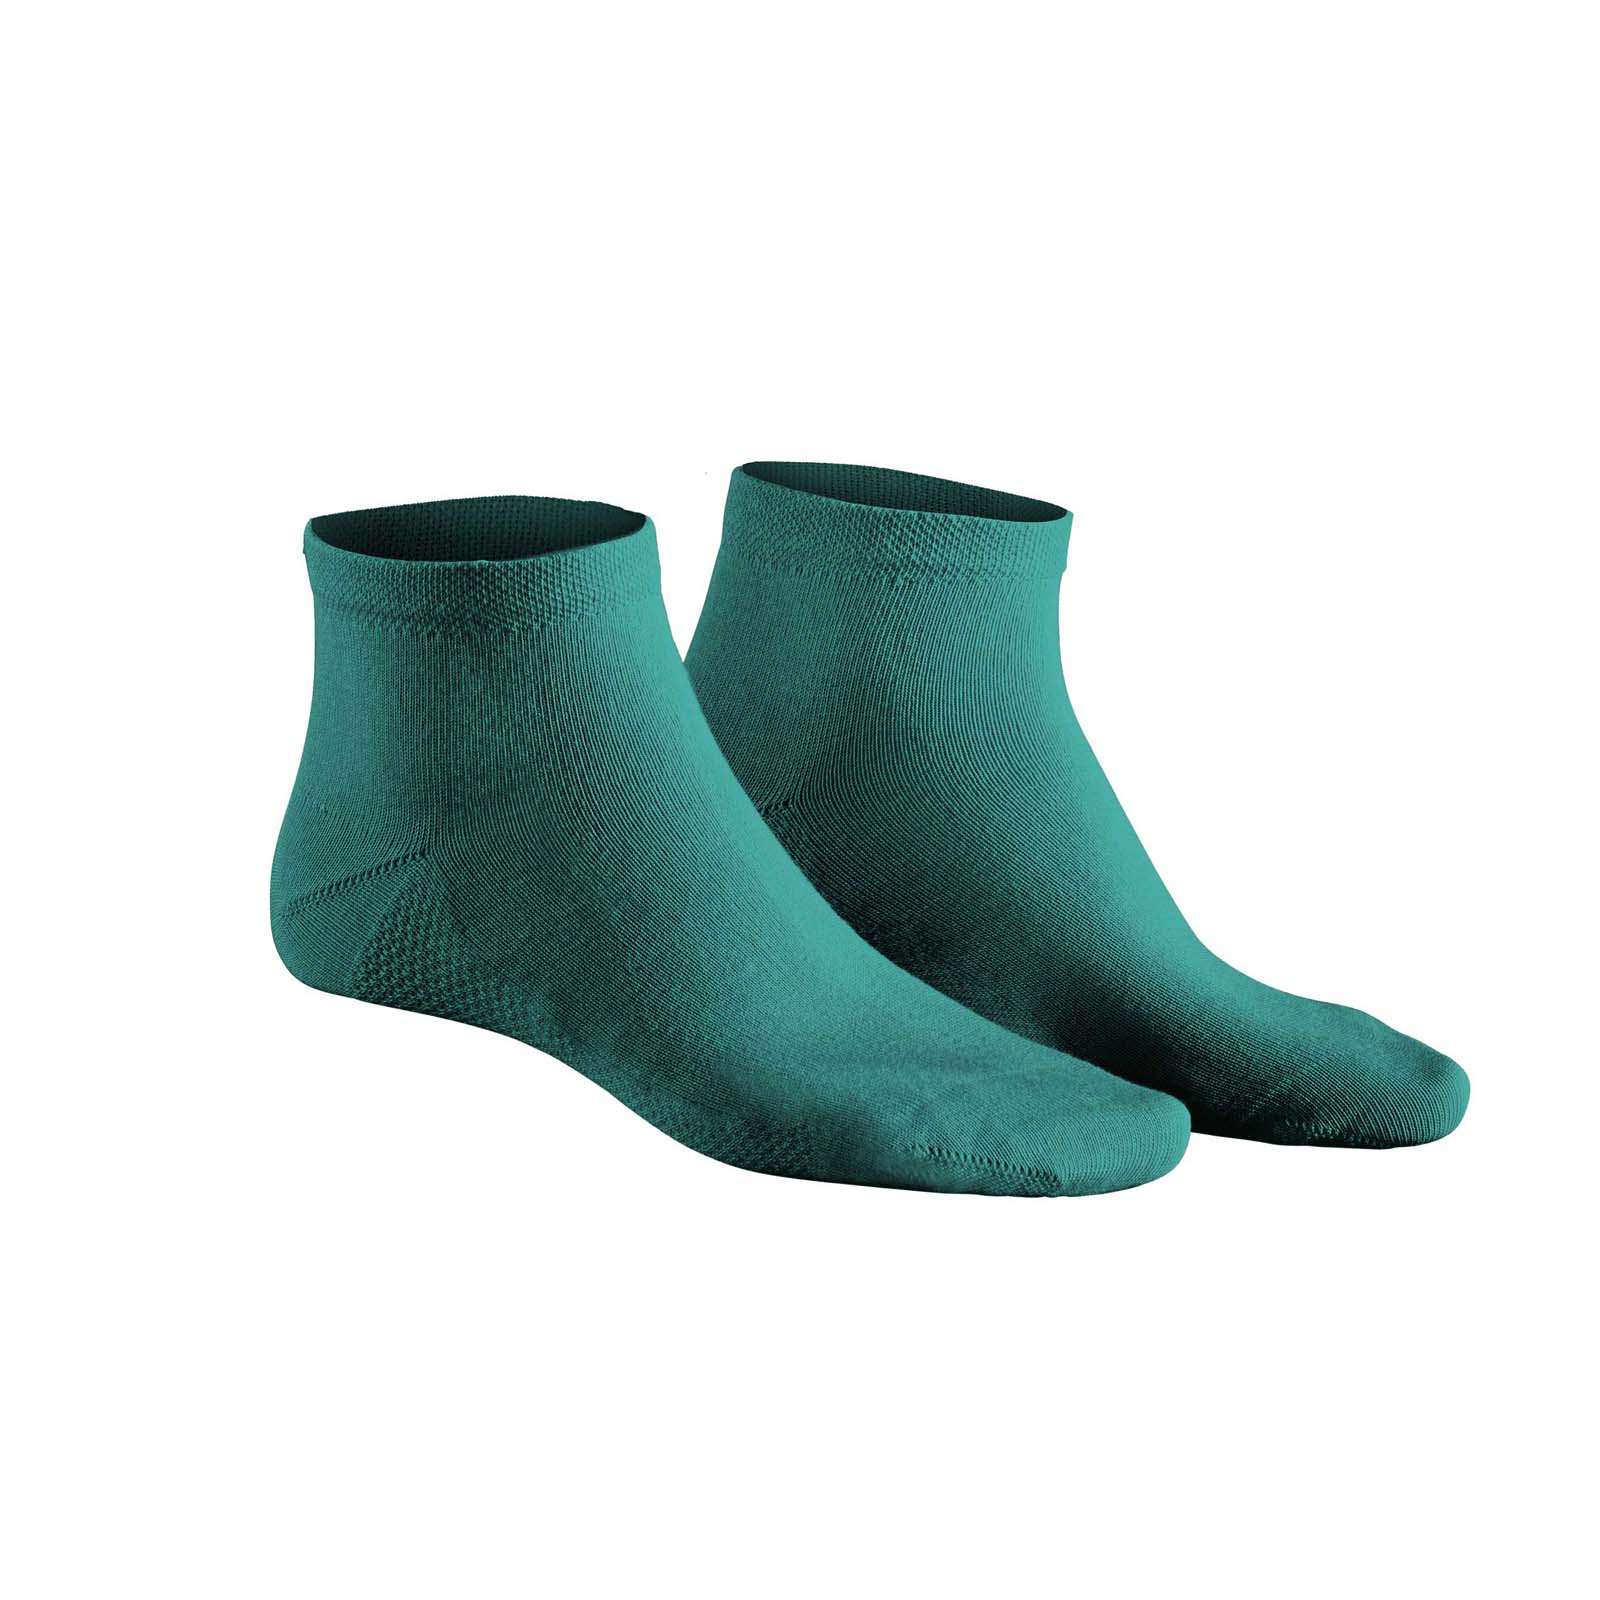 HUDSON Herren DRY COTTON -  39/42 - Feuchtigkeitsregulierende Herren Sneaker Socken - Salem (Grün)